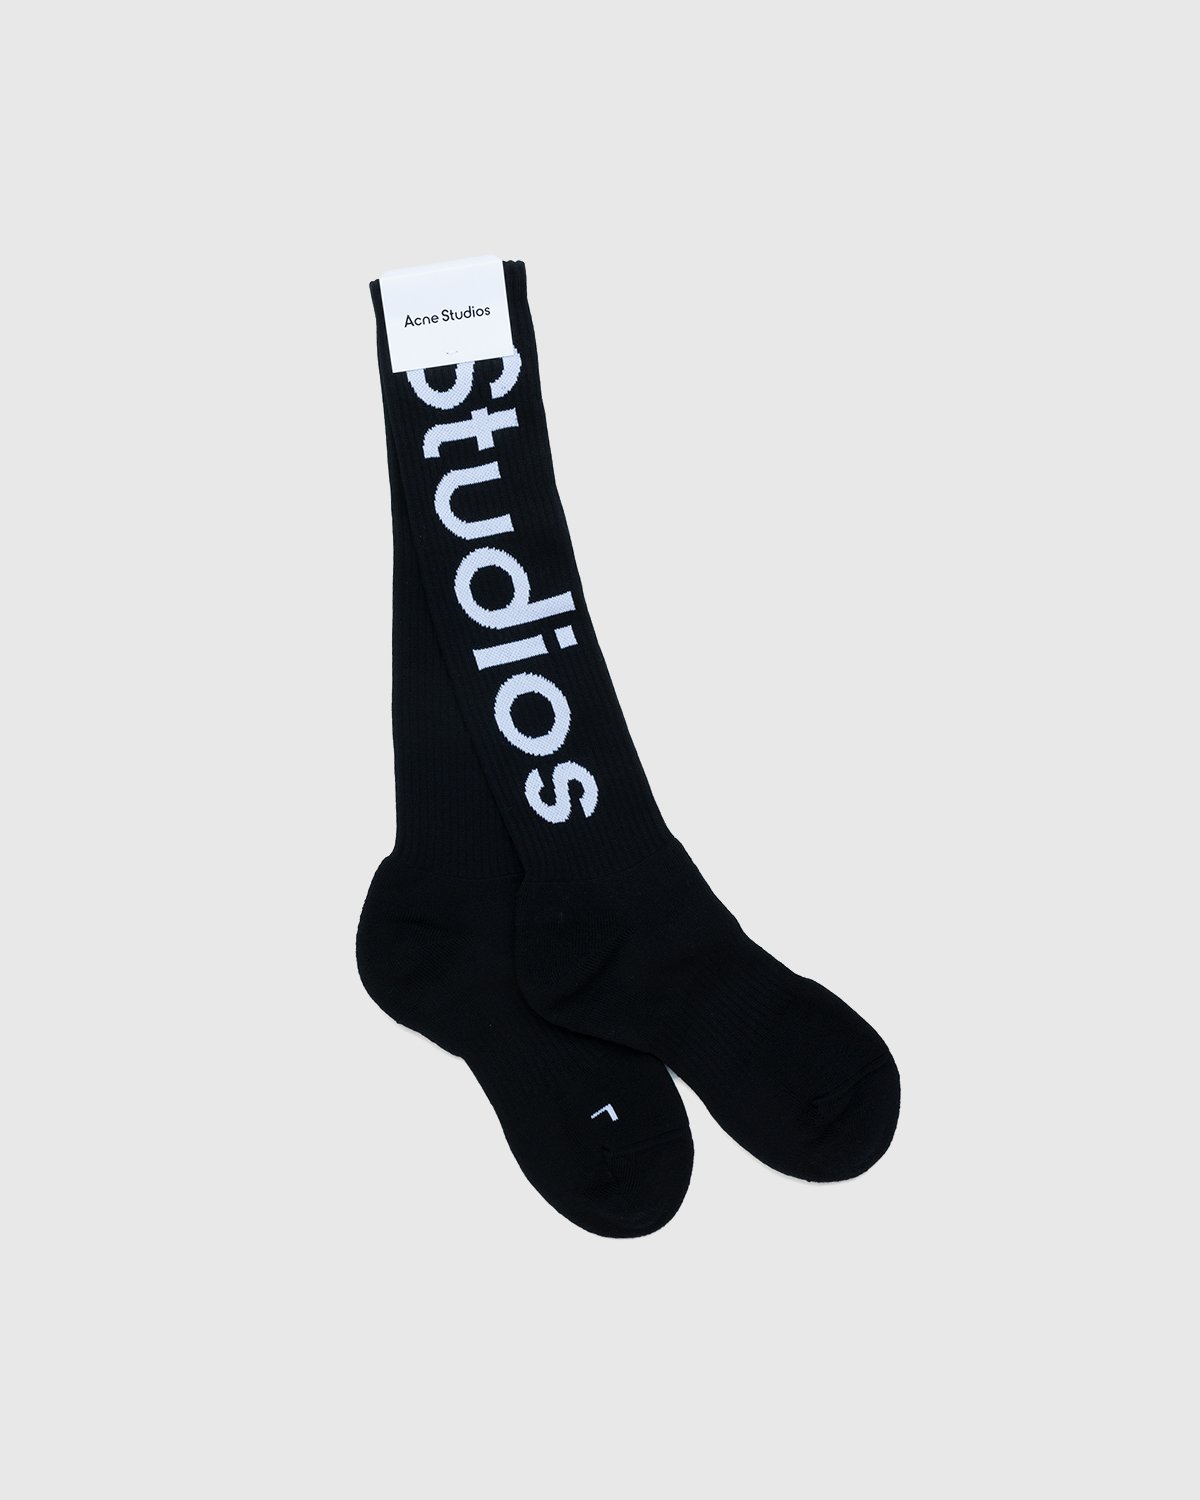 Acne Studios - Logo Socks Black - Accessories - Black - Image 1